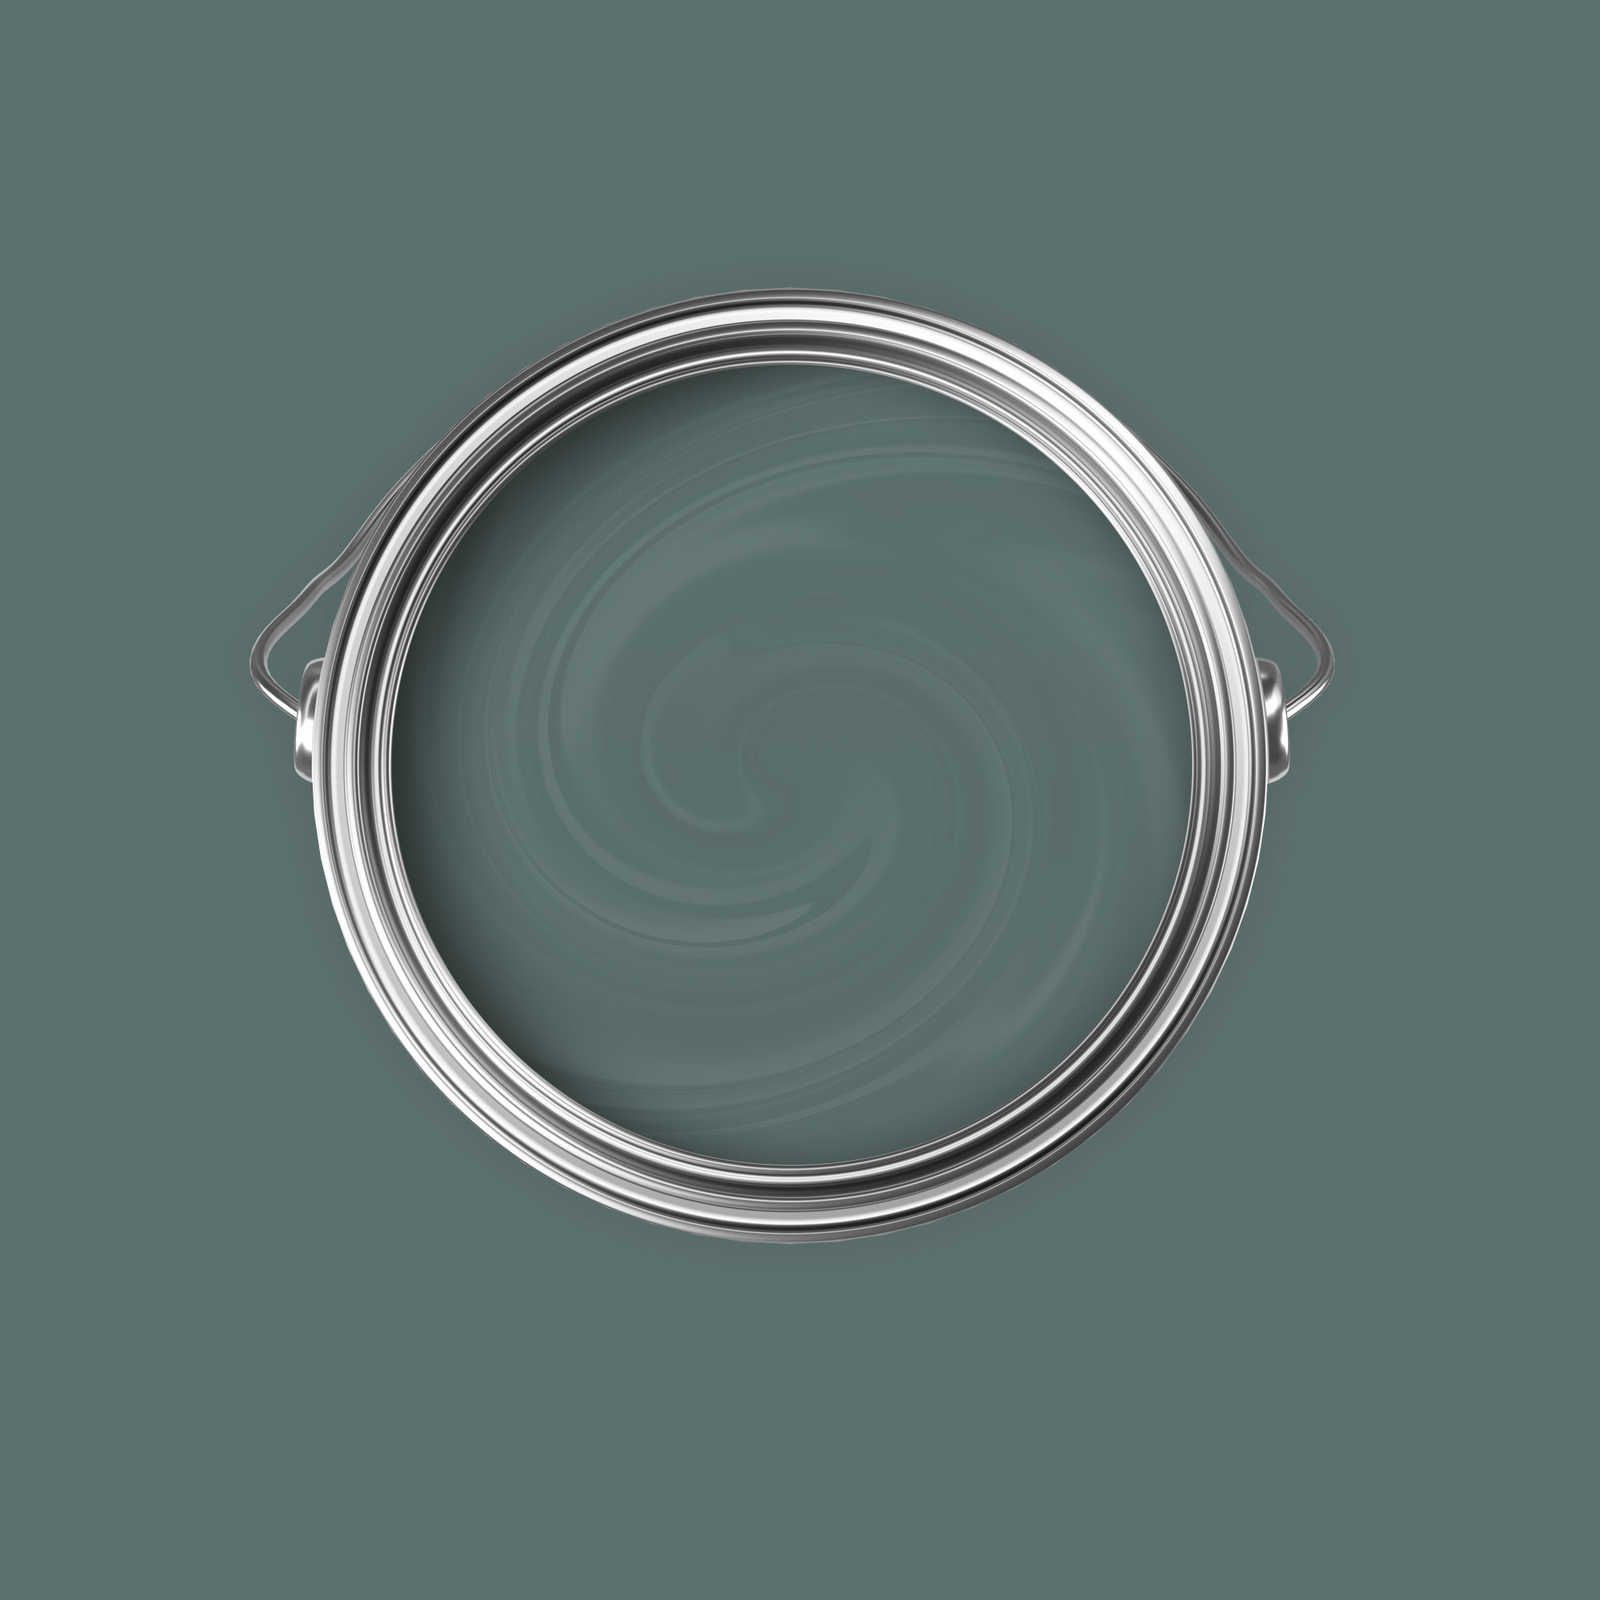             Premium Wandfarbe entspannendes Grau Grün »Sweet Sage« NW405 – 5 Liter
        